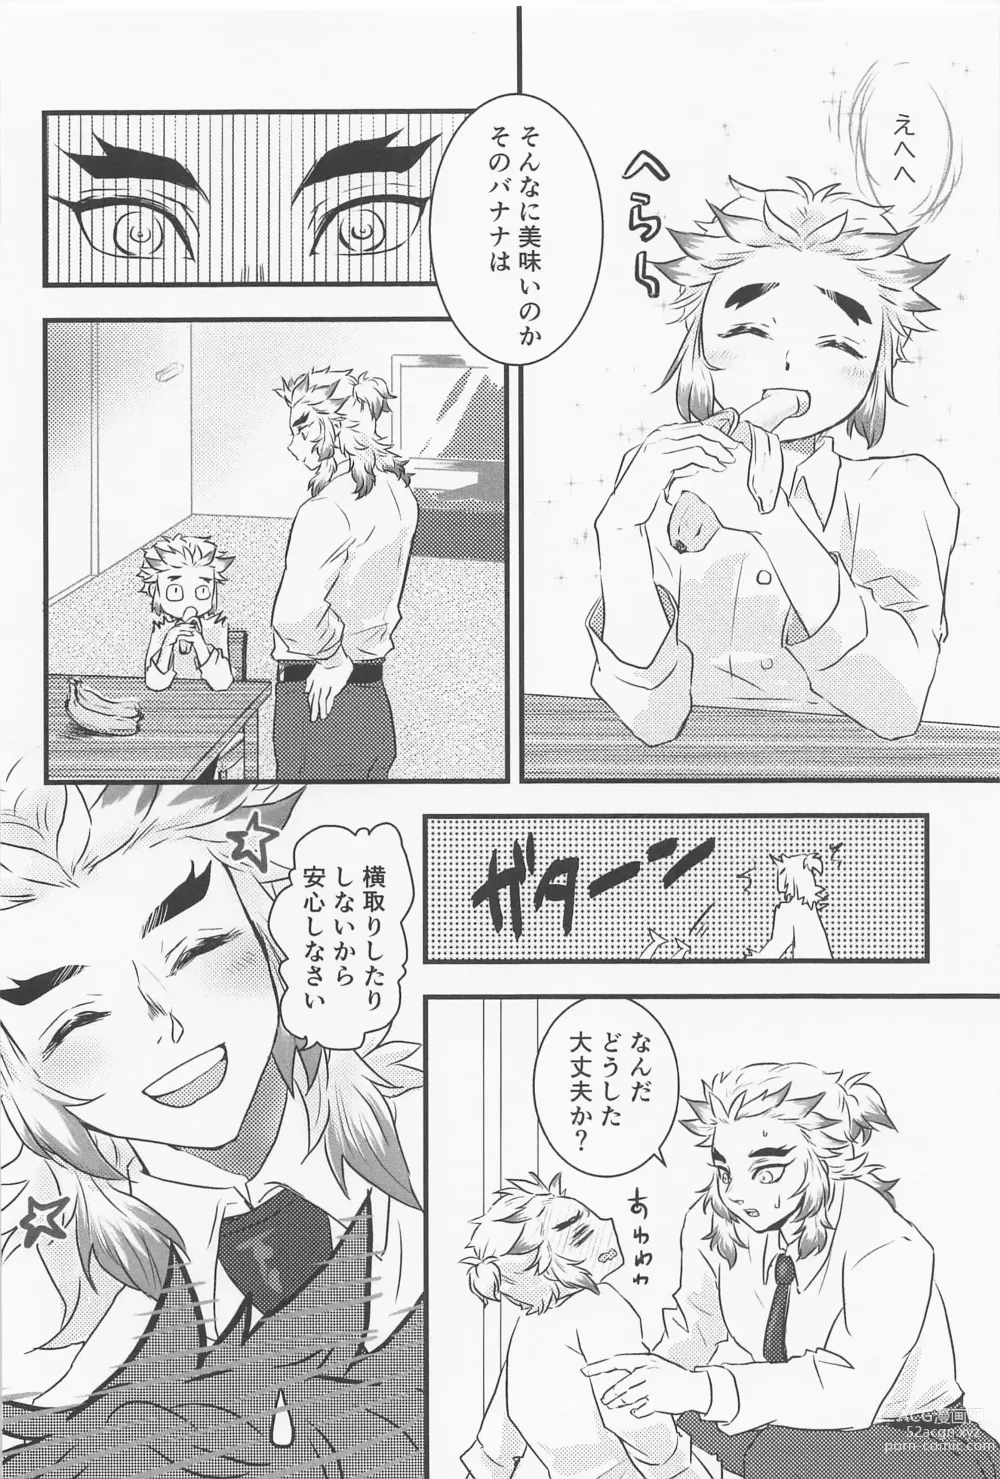 Page 6 of doujinshi GIFT